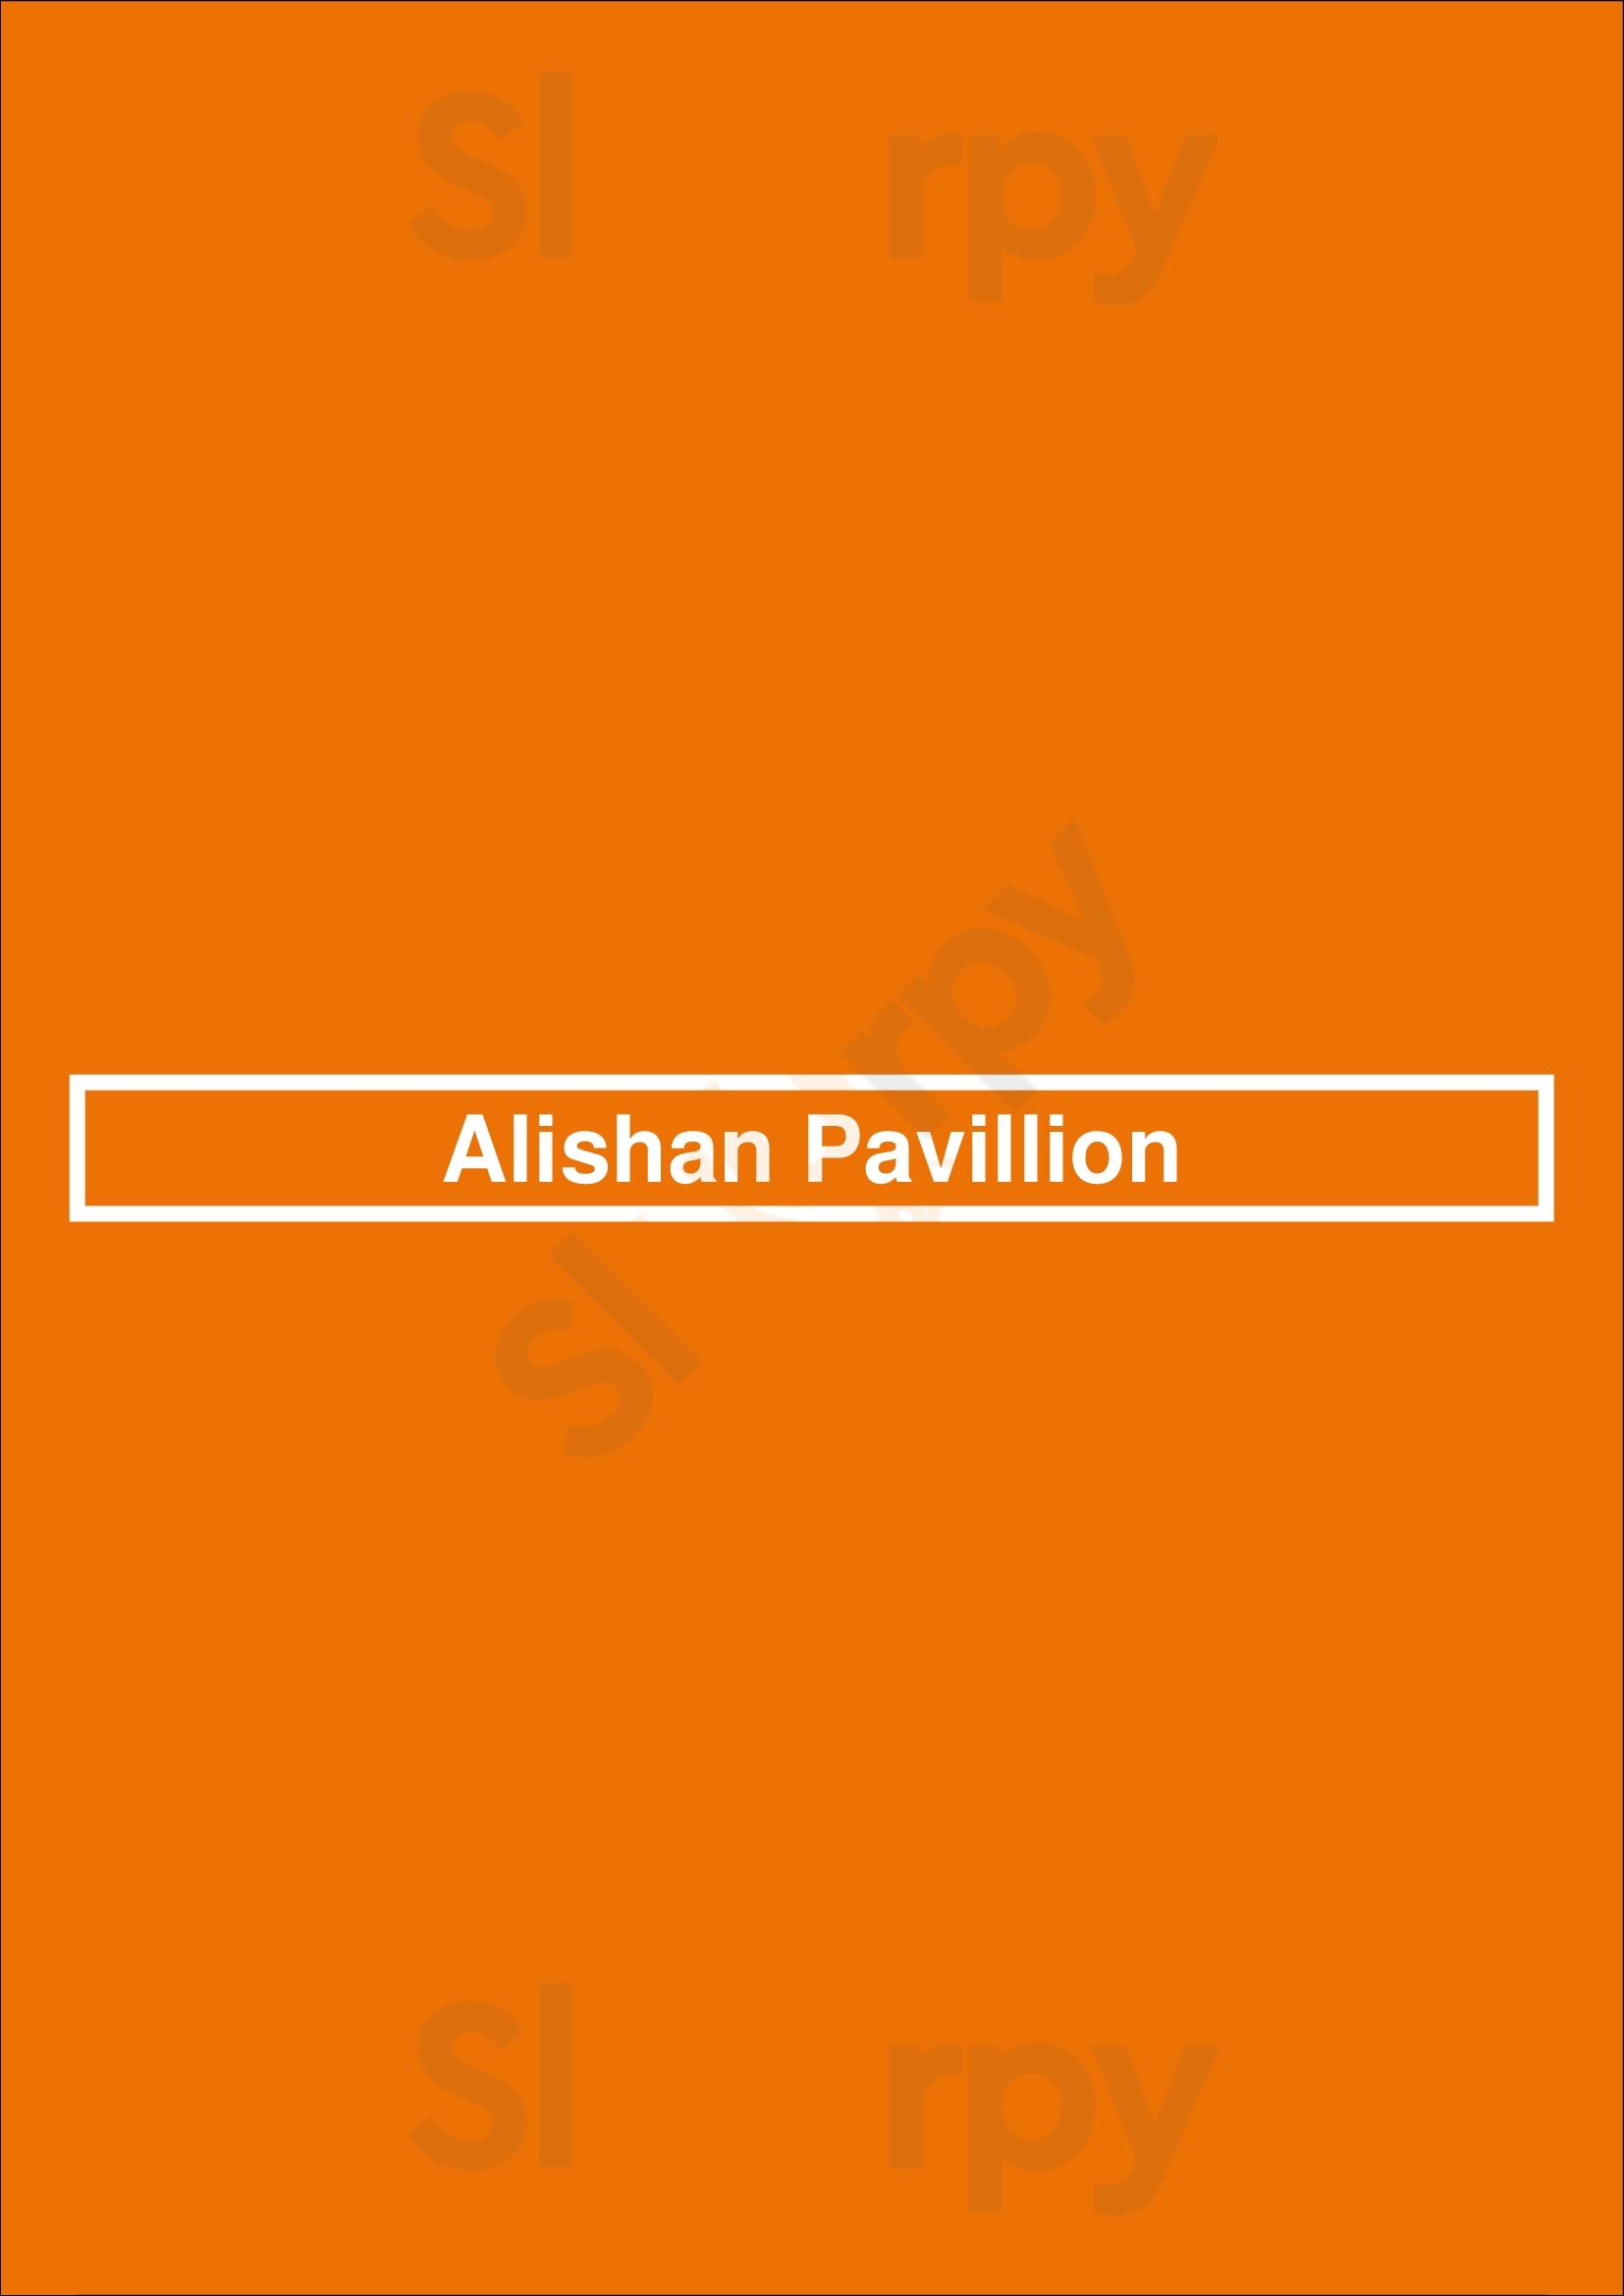 Alishan Pavillion Ipswich Menu - 1